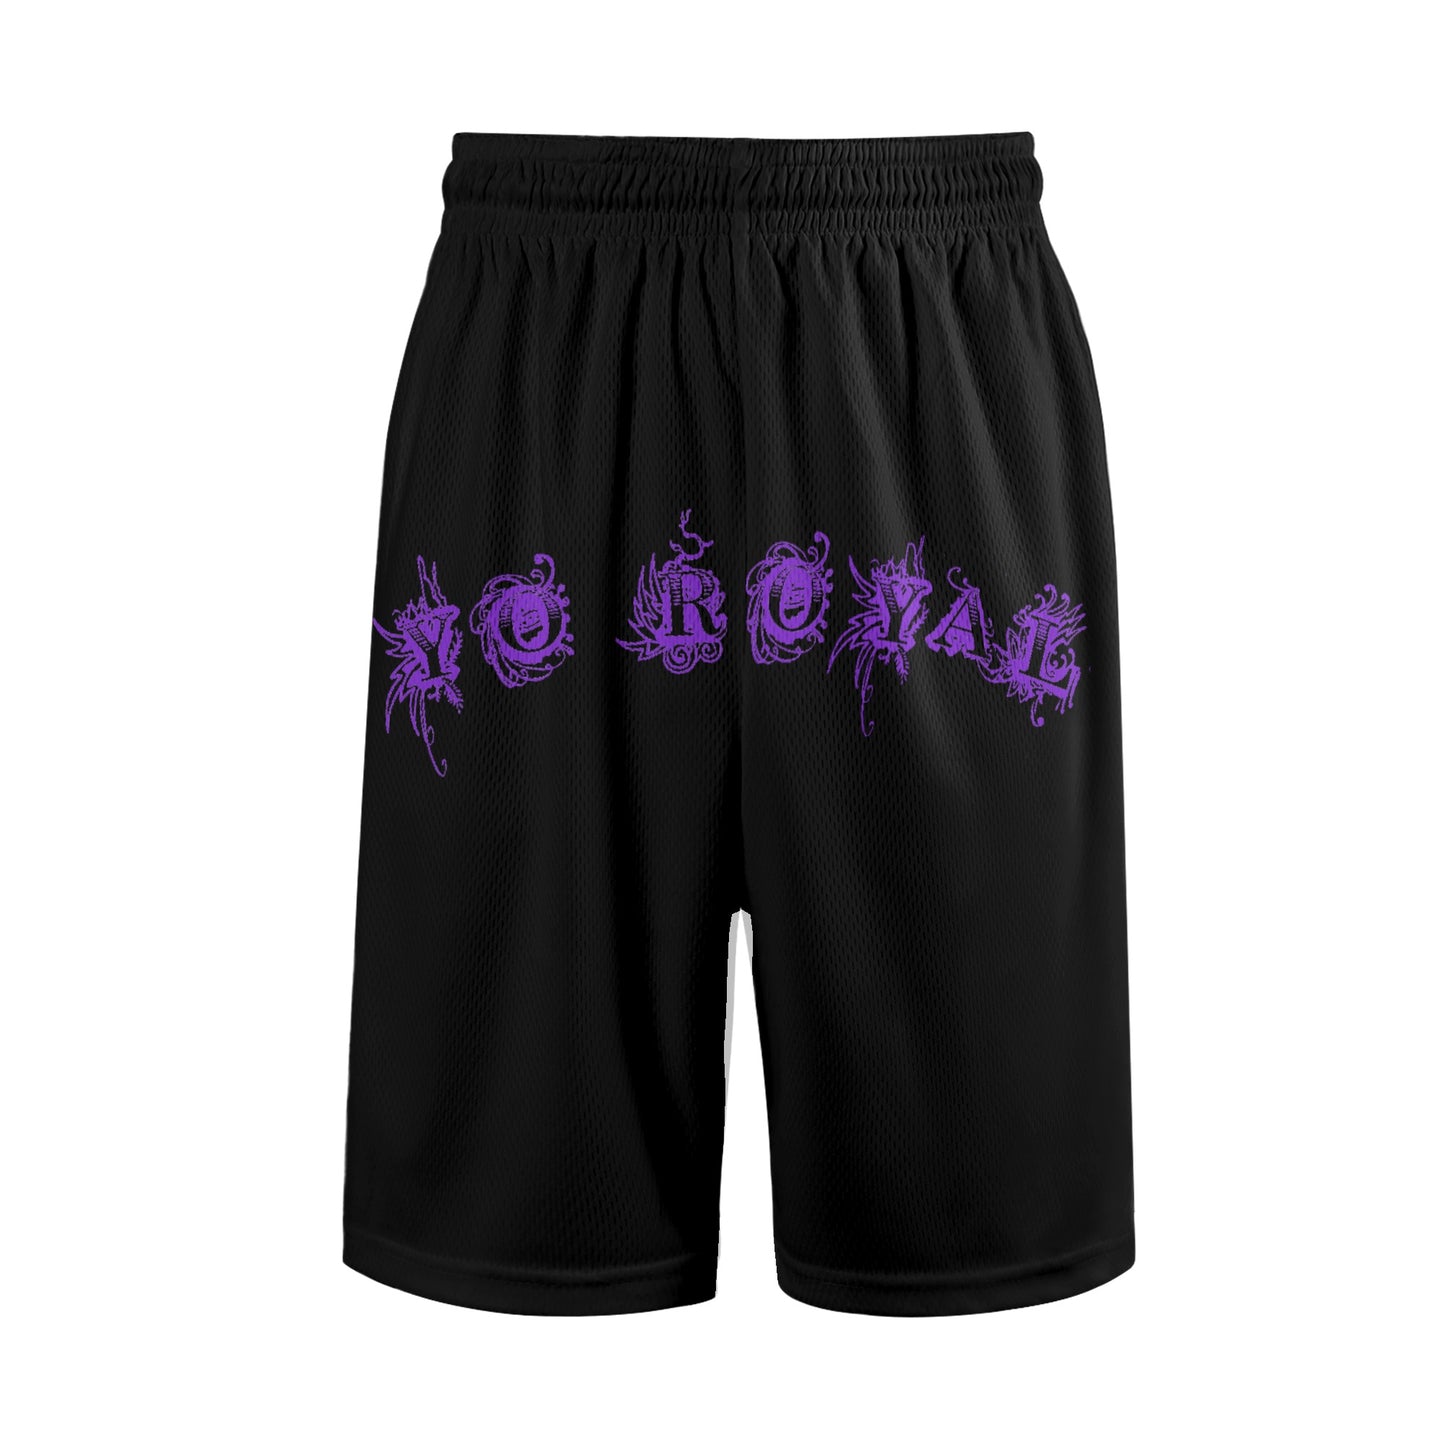 Yo Royal Basketball Shorts